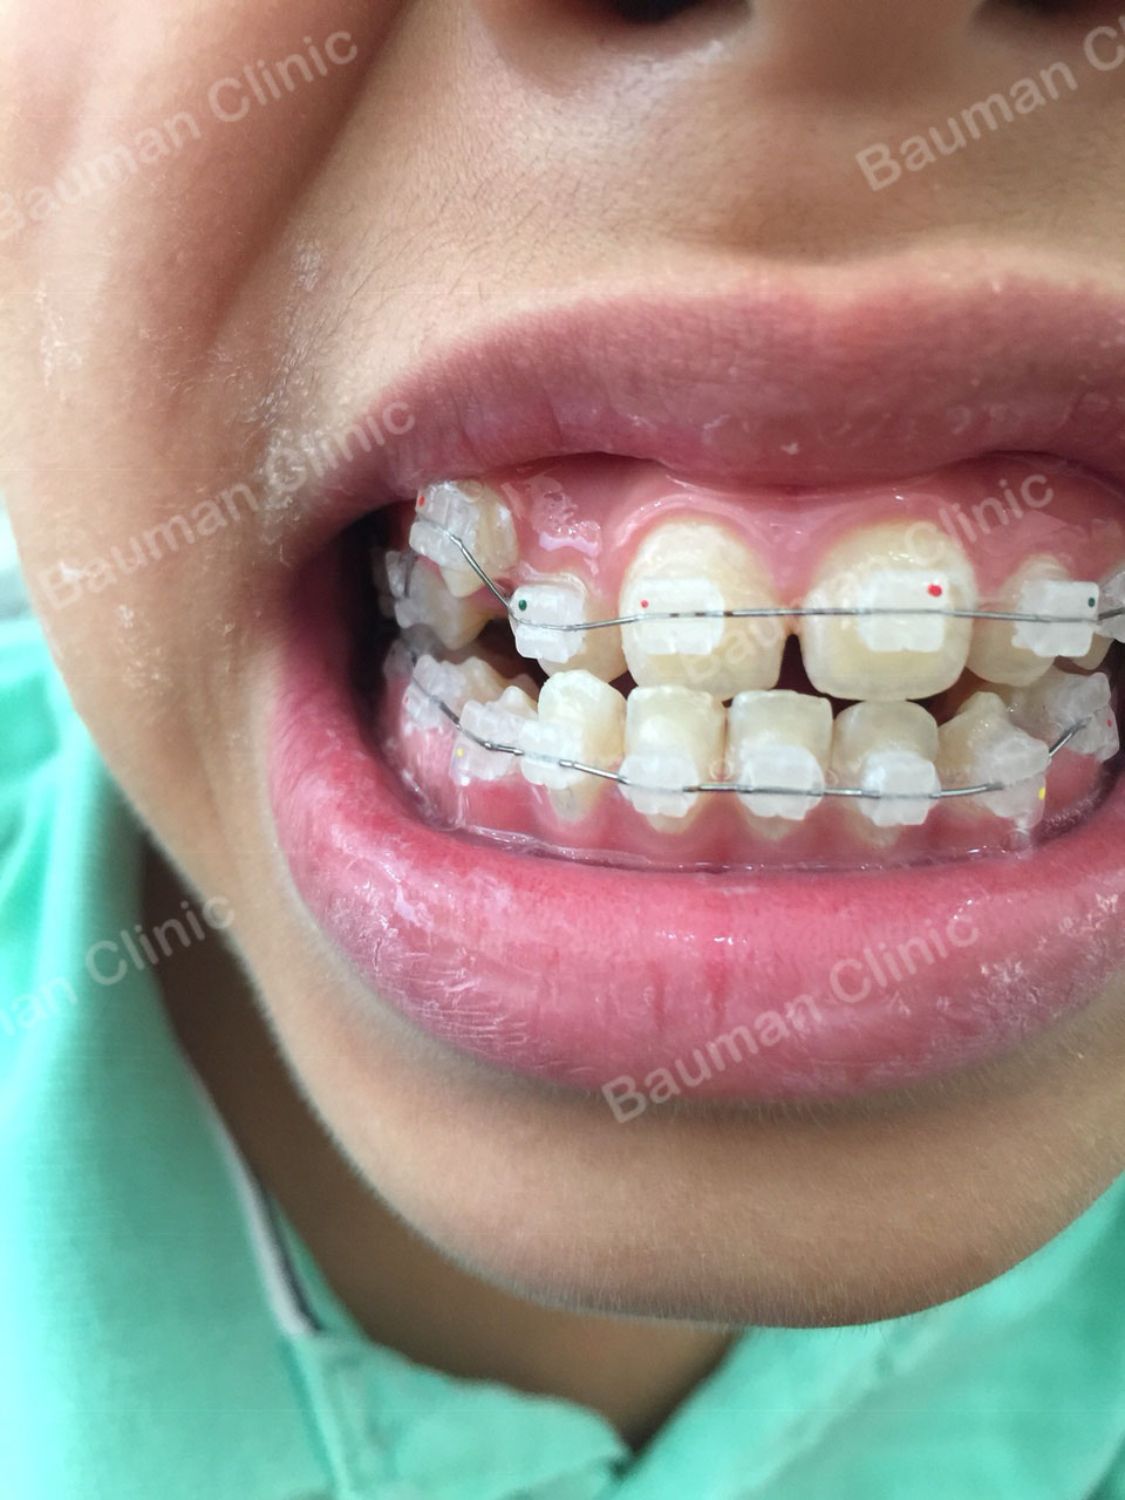 Ca niềng răng số 5058 - Nha khoa Bauman Clinic